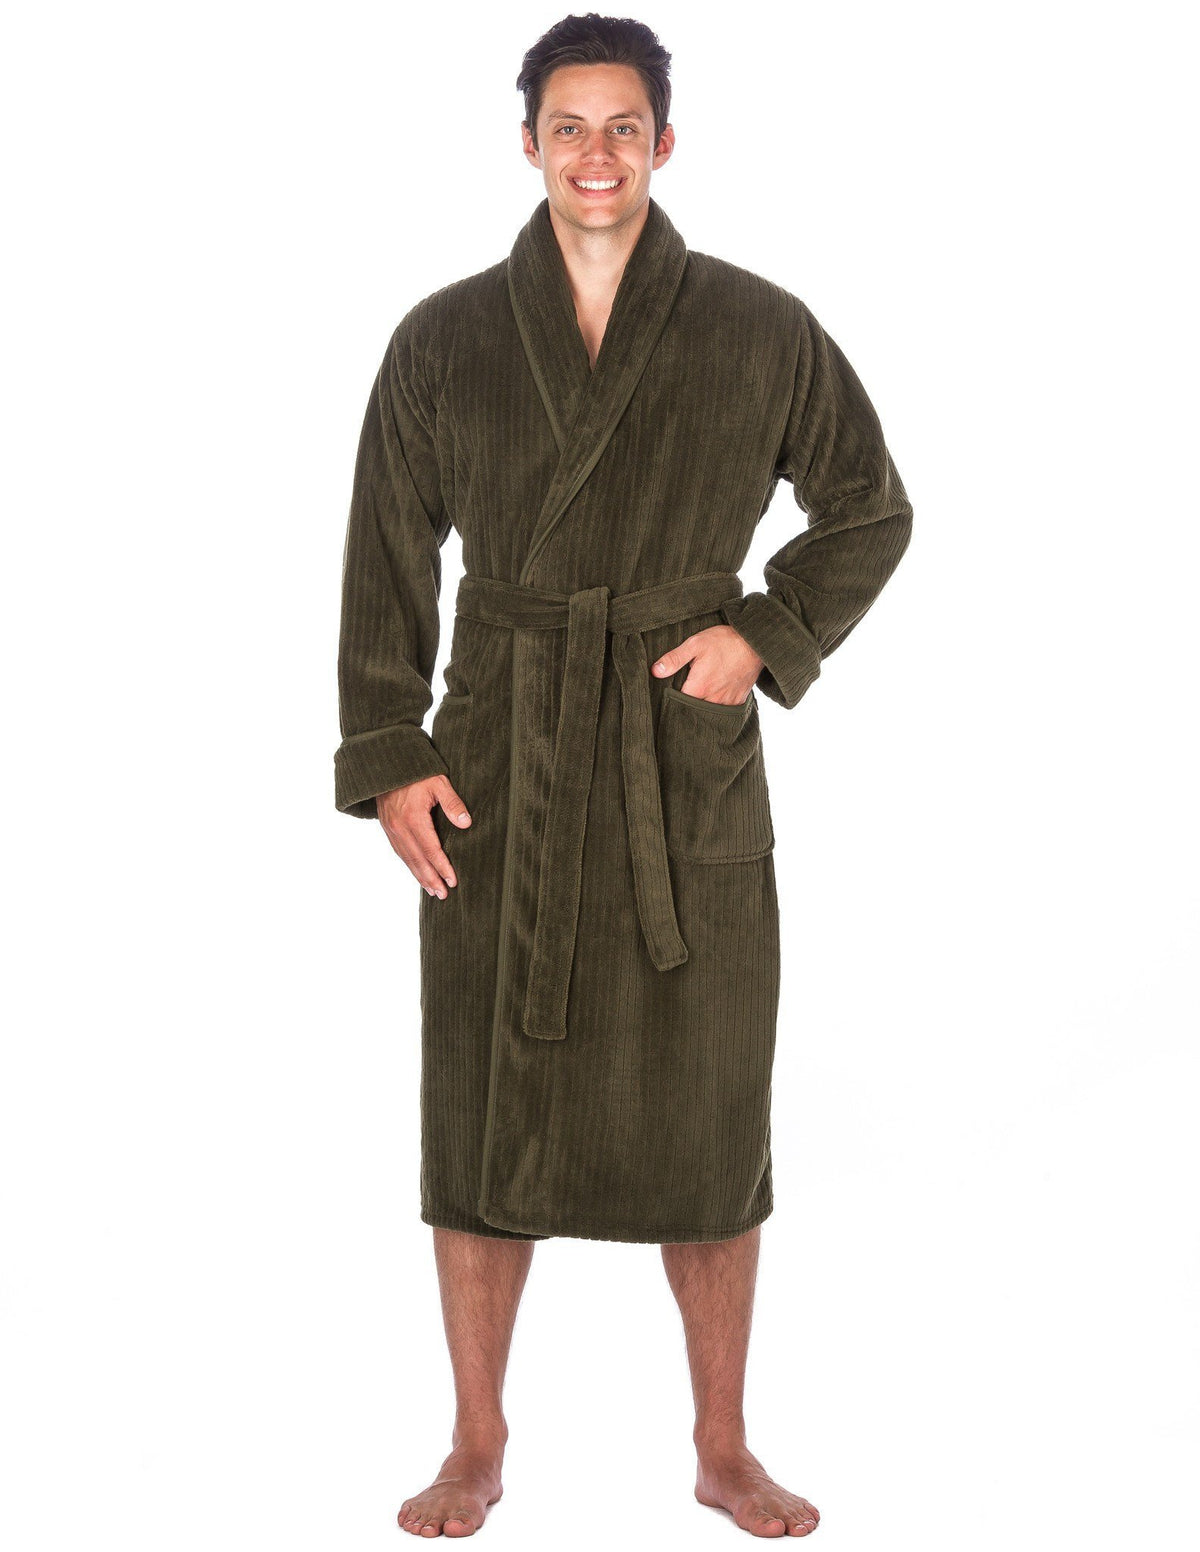 Men's Premium Coral Fleece Plush Spa/Bath Robe - Olive